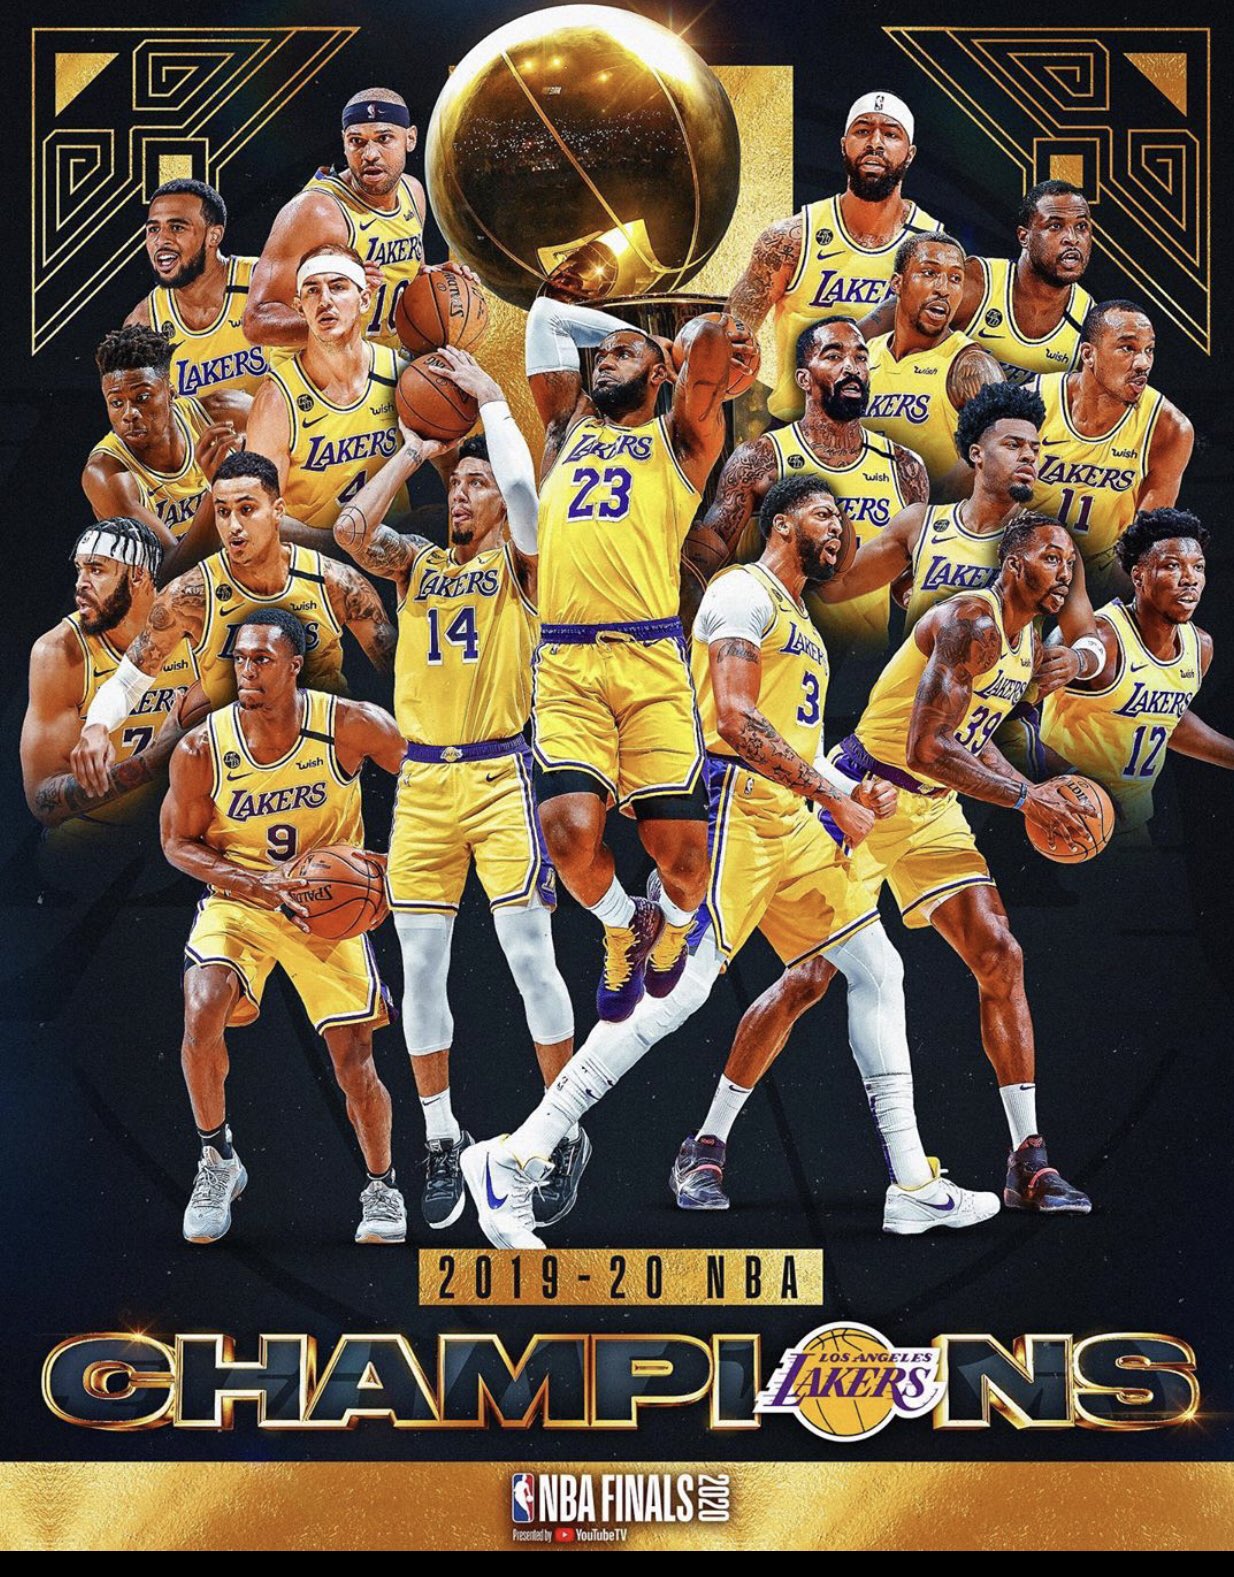 Los Angeles Lakers 2020 NBA Finals Champions Wallpapers - Wallpaper Cave